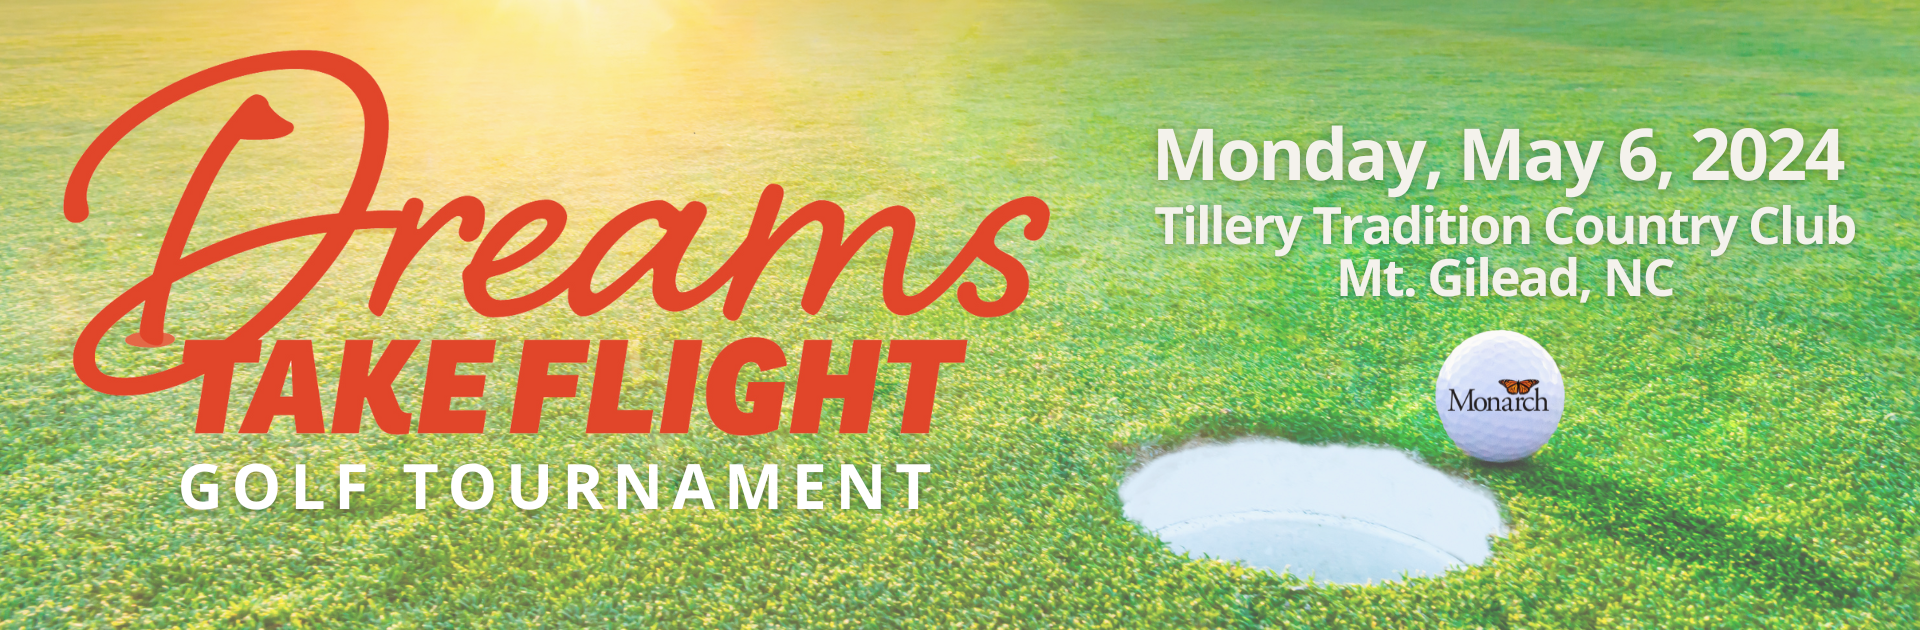 Golf Tournament May 6